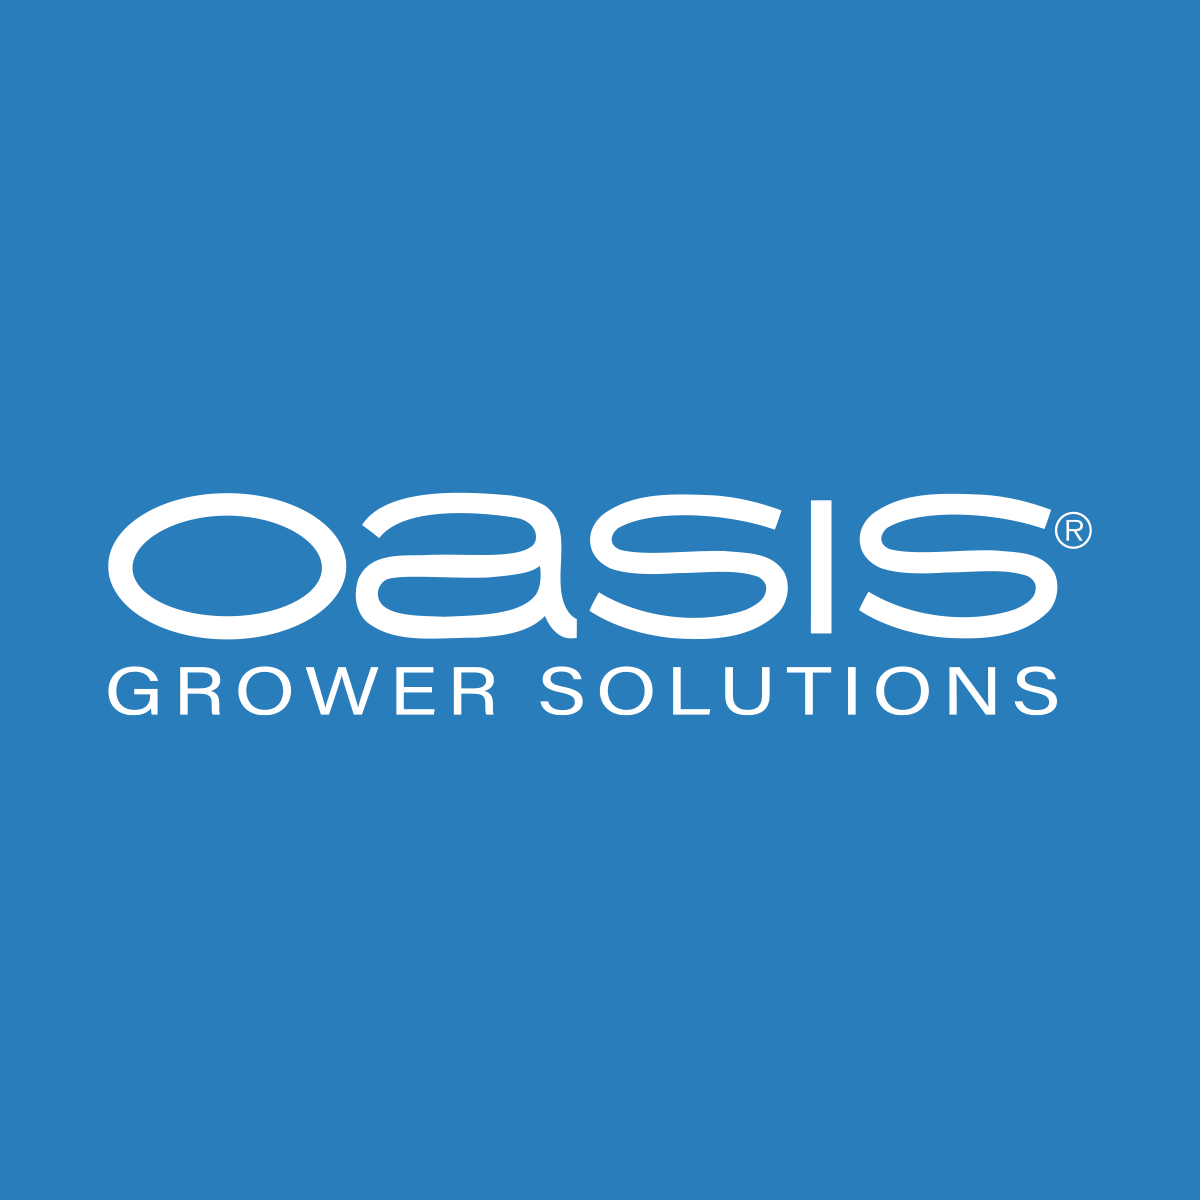 (c) Oasisgrowersolutions.com.br